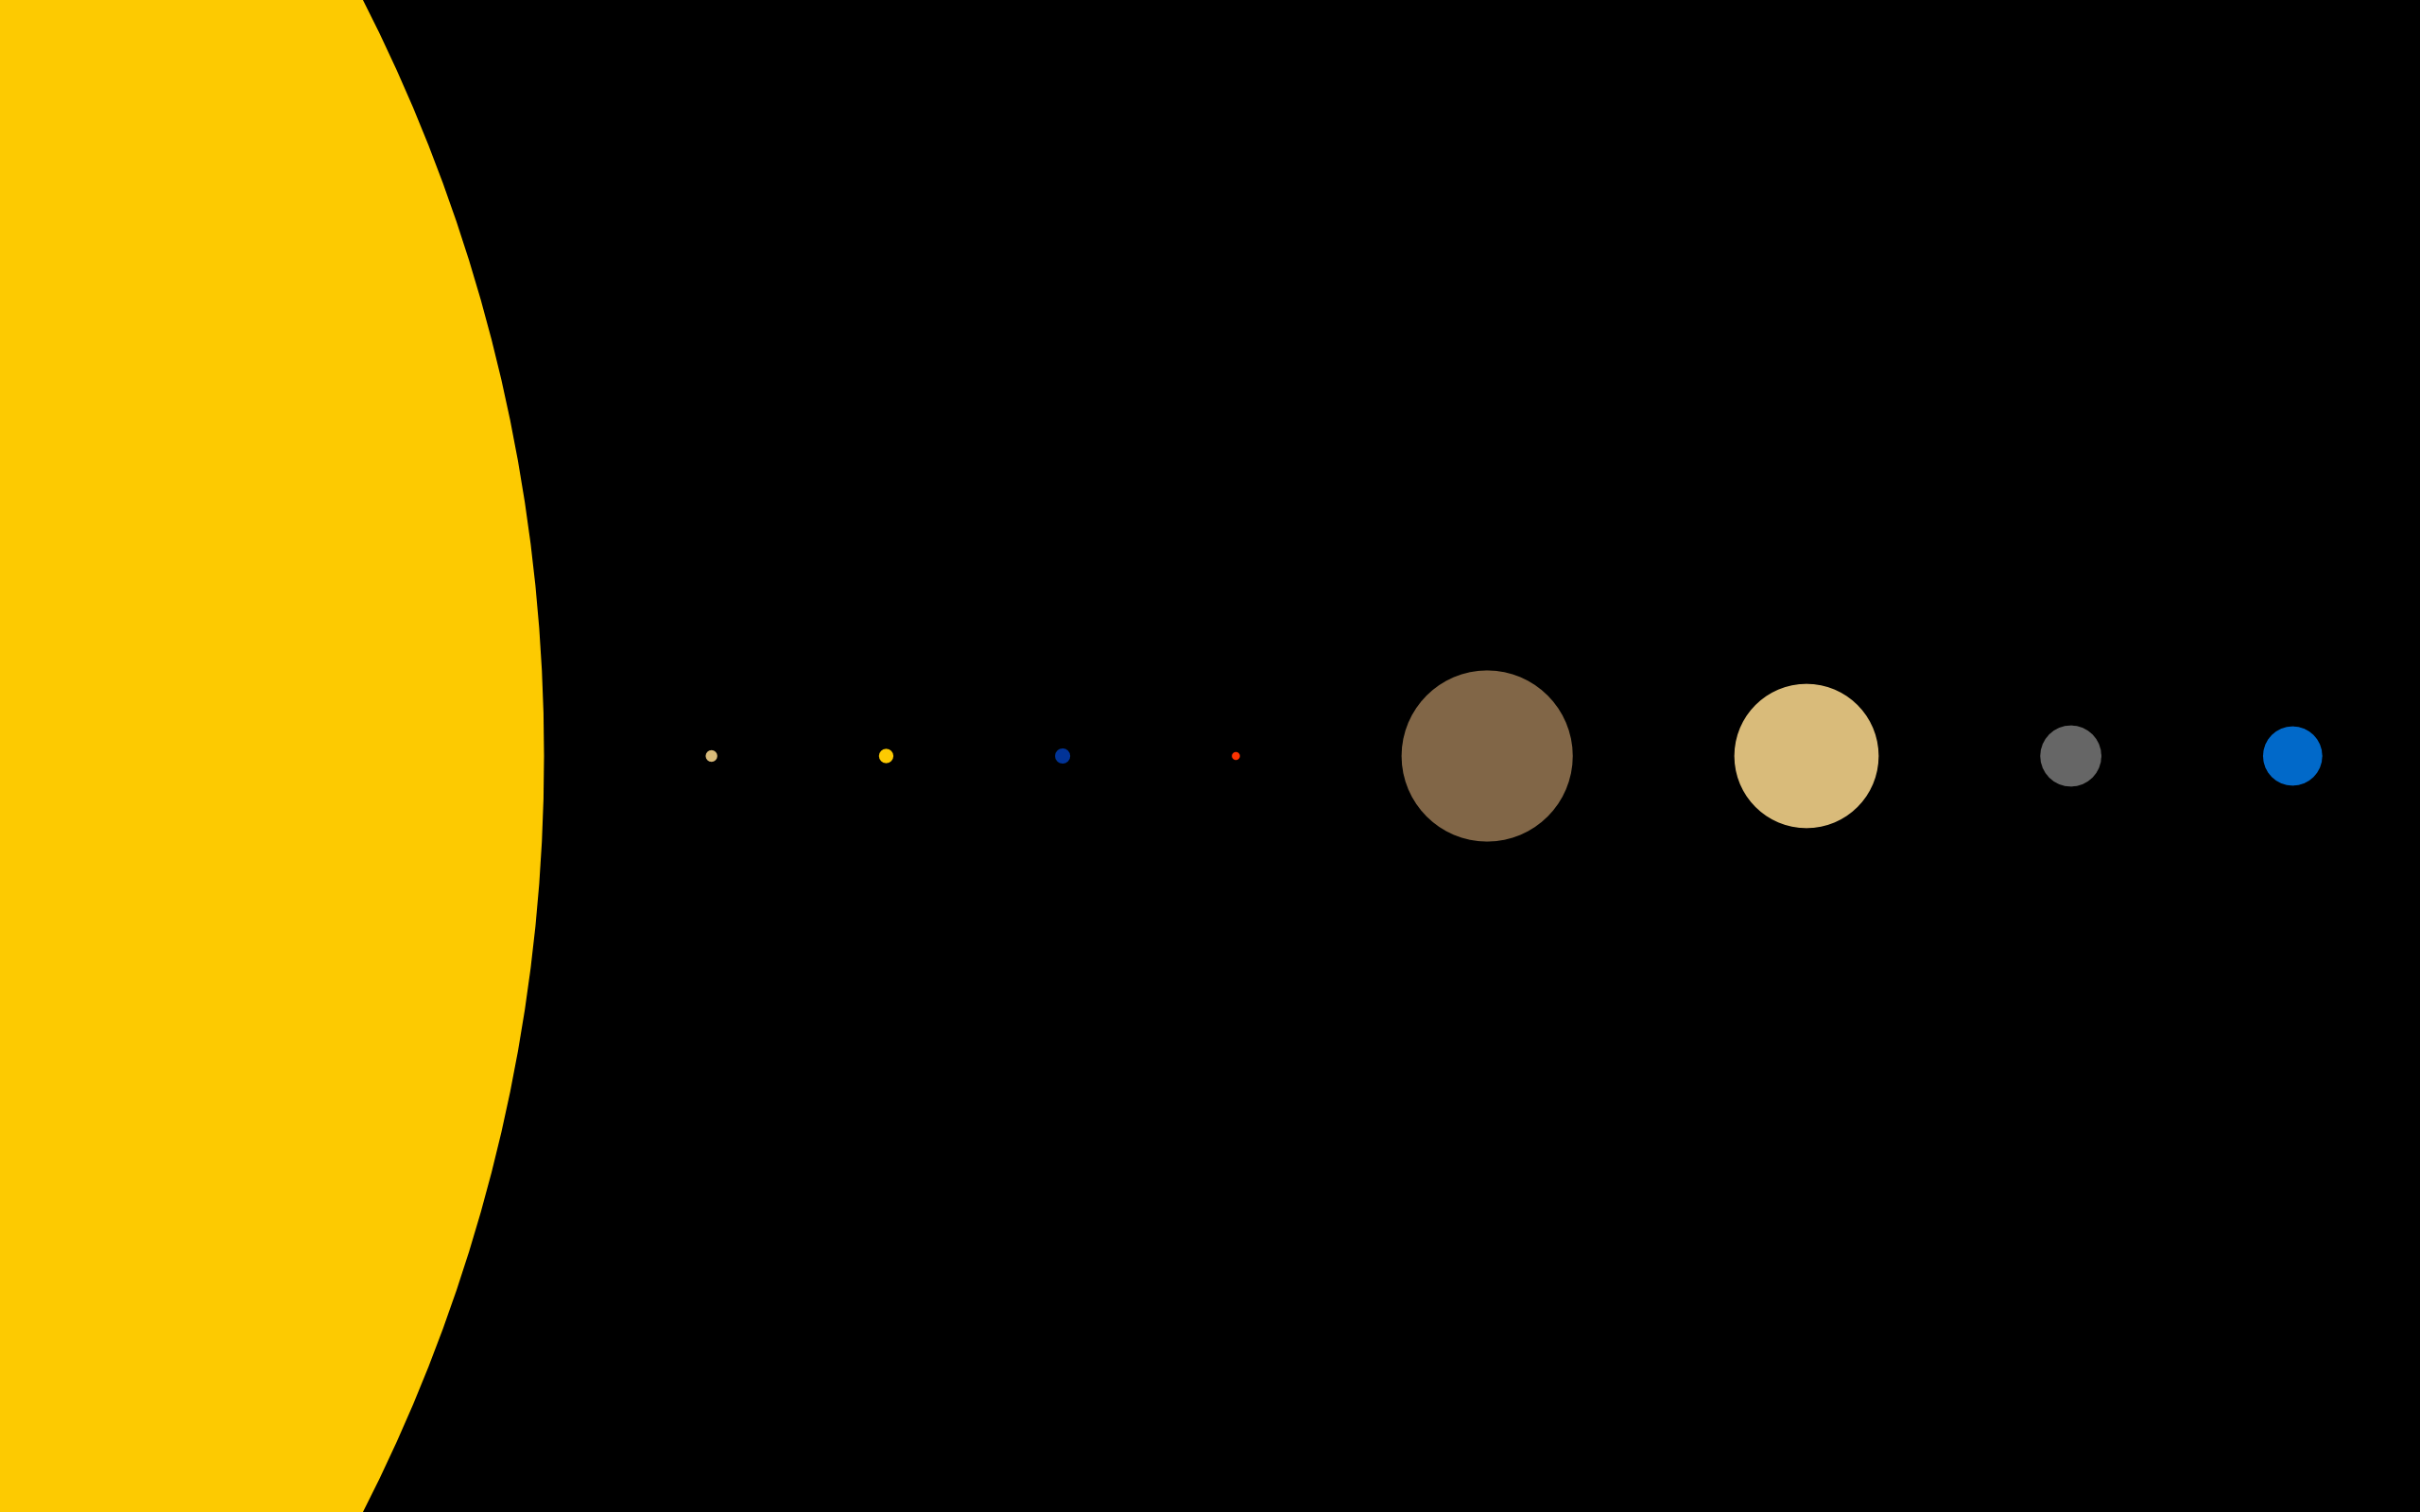 our minimalist solar system